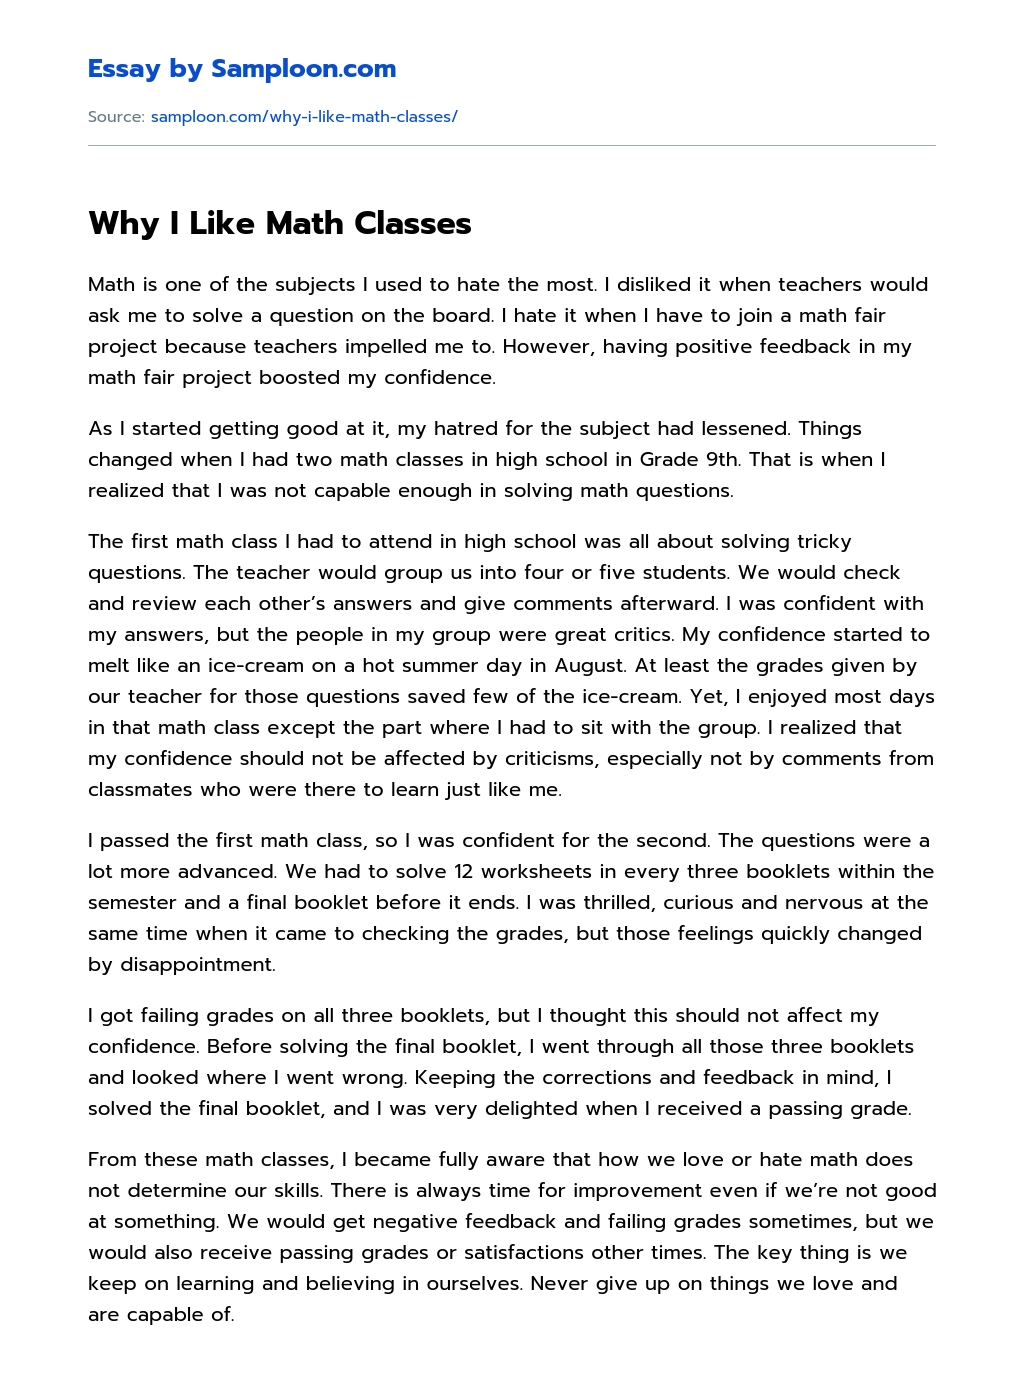 Why I Like Math Classes essay